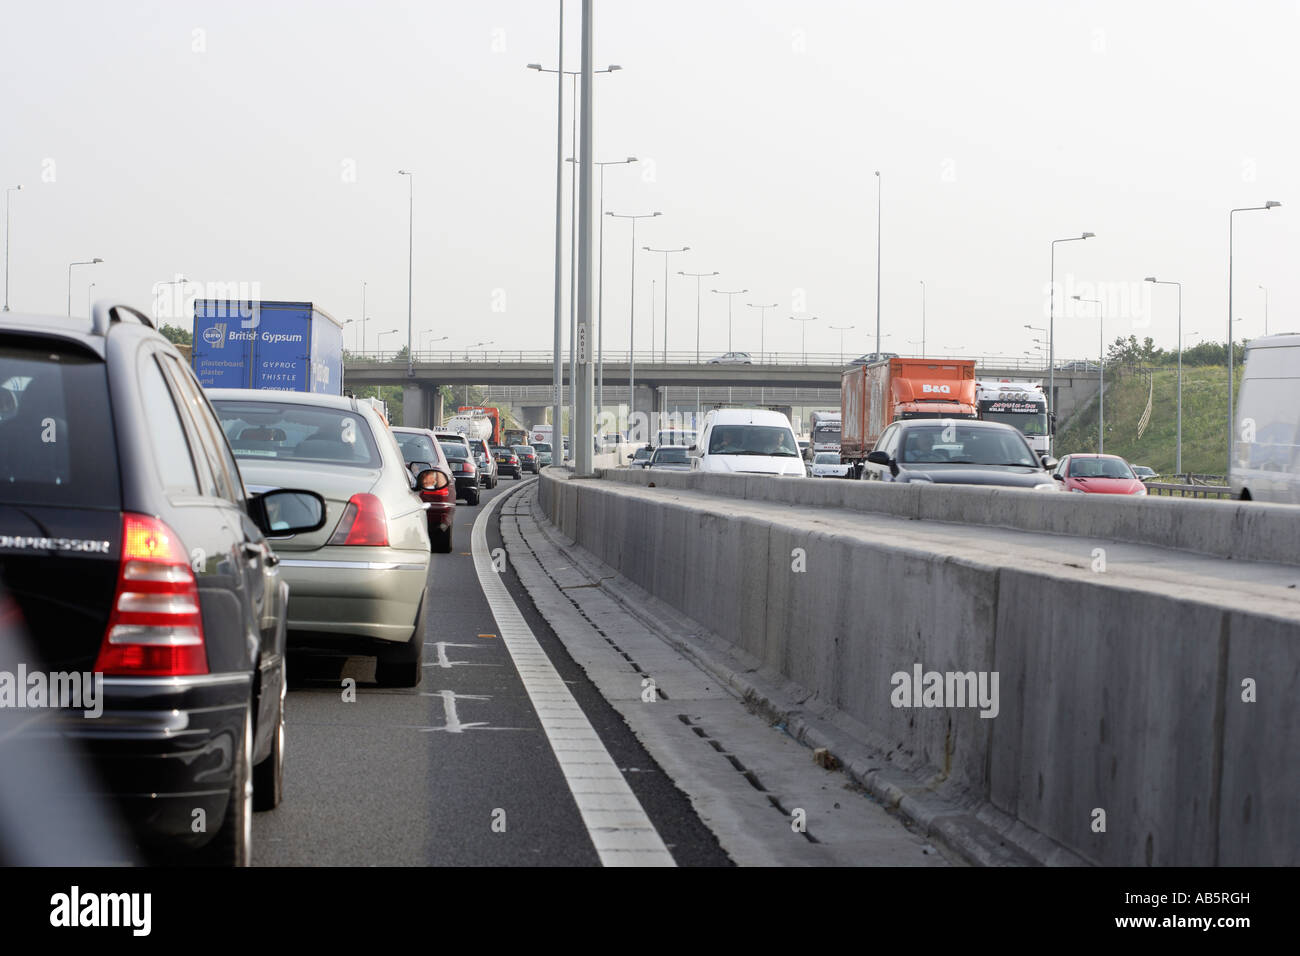 Traffic queue on the motorway Stock Photo